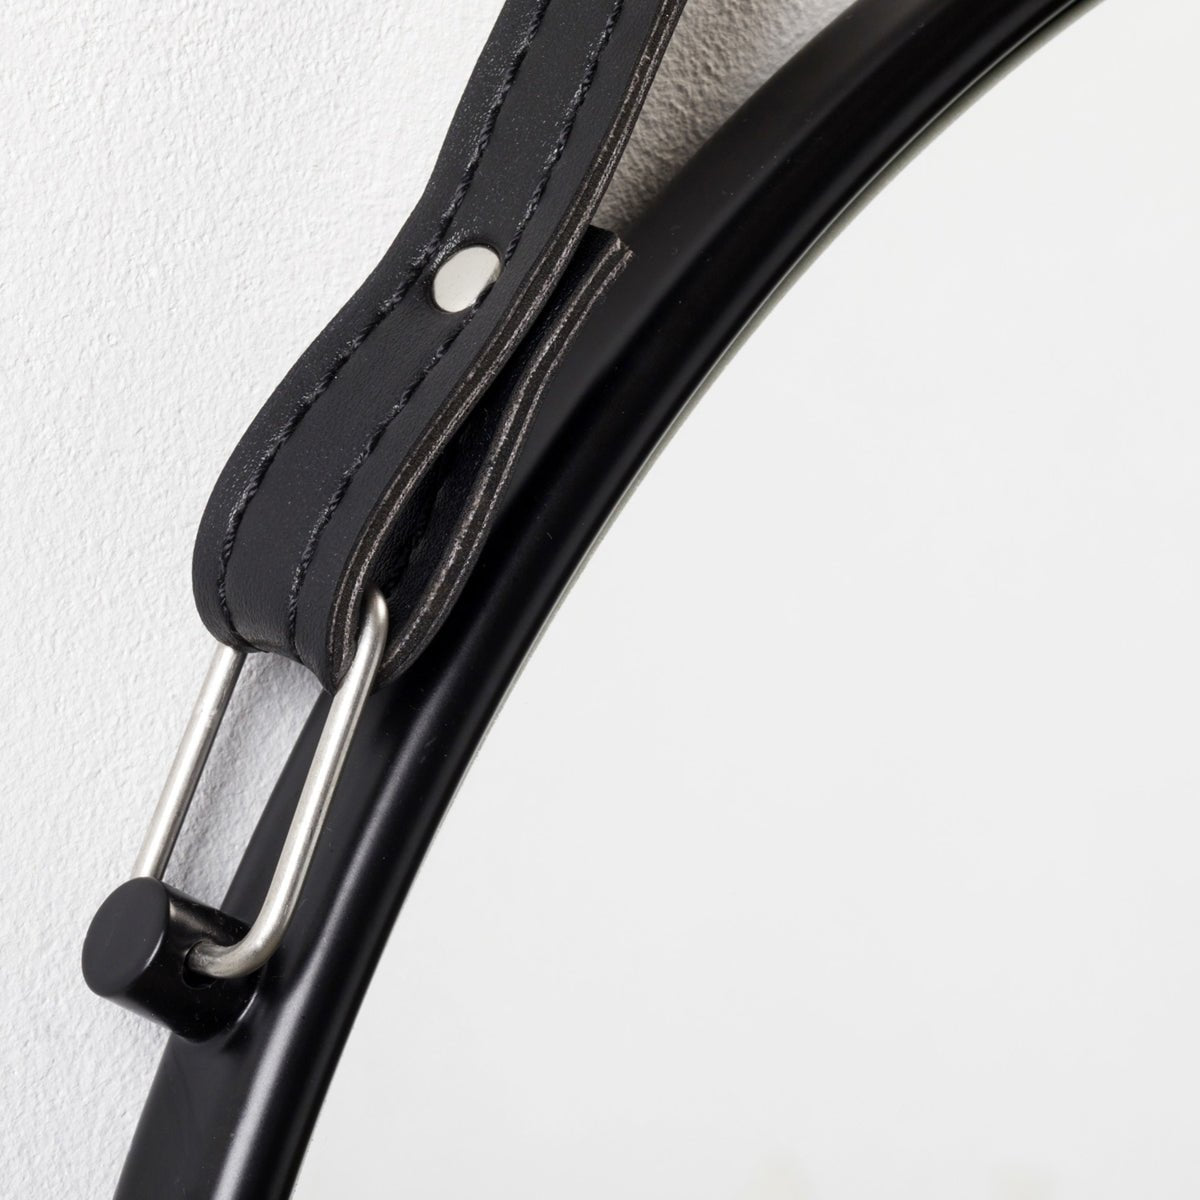 Strap Mirror Black Matte - |VESIMI Design| Luxury and Rustic bathrooms online